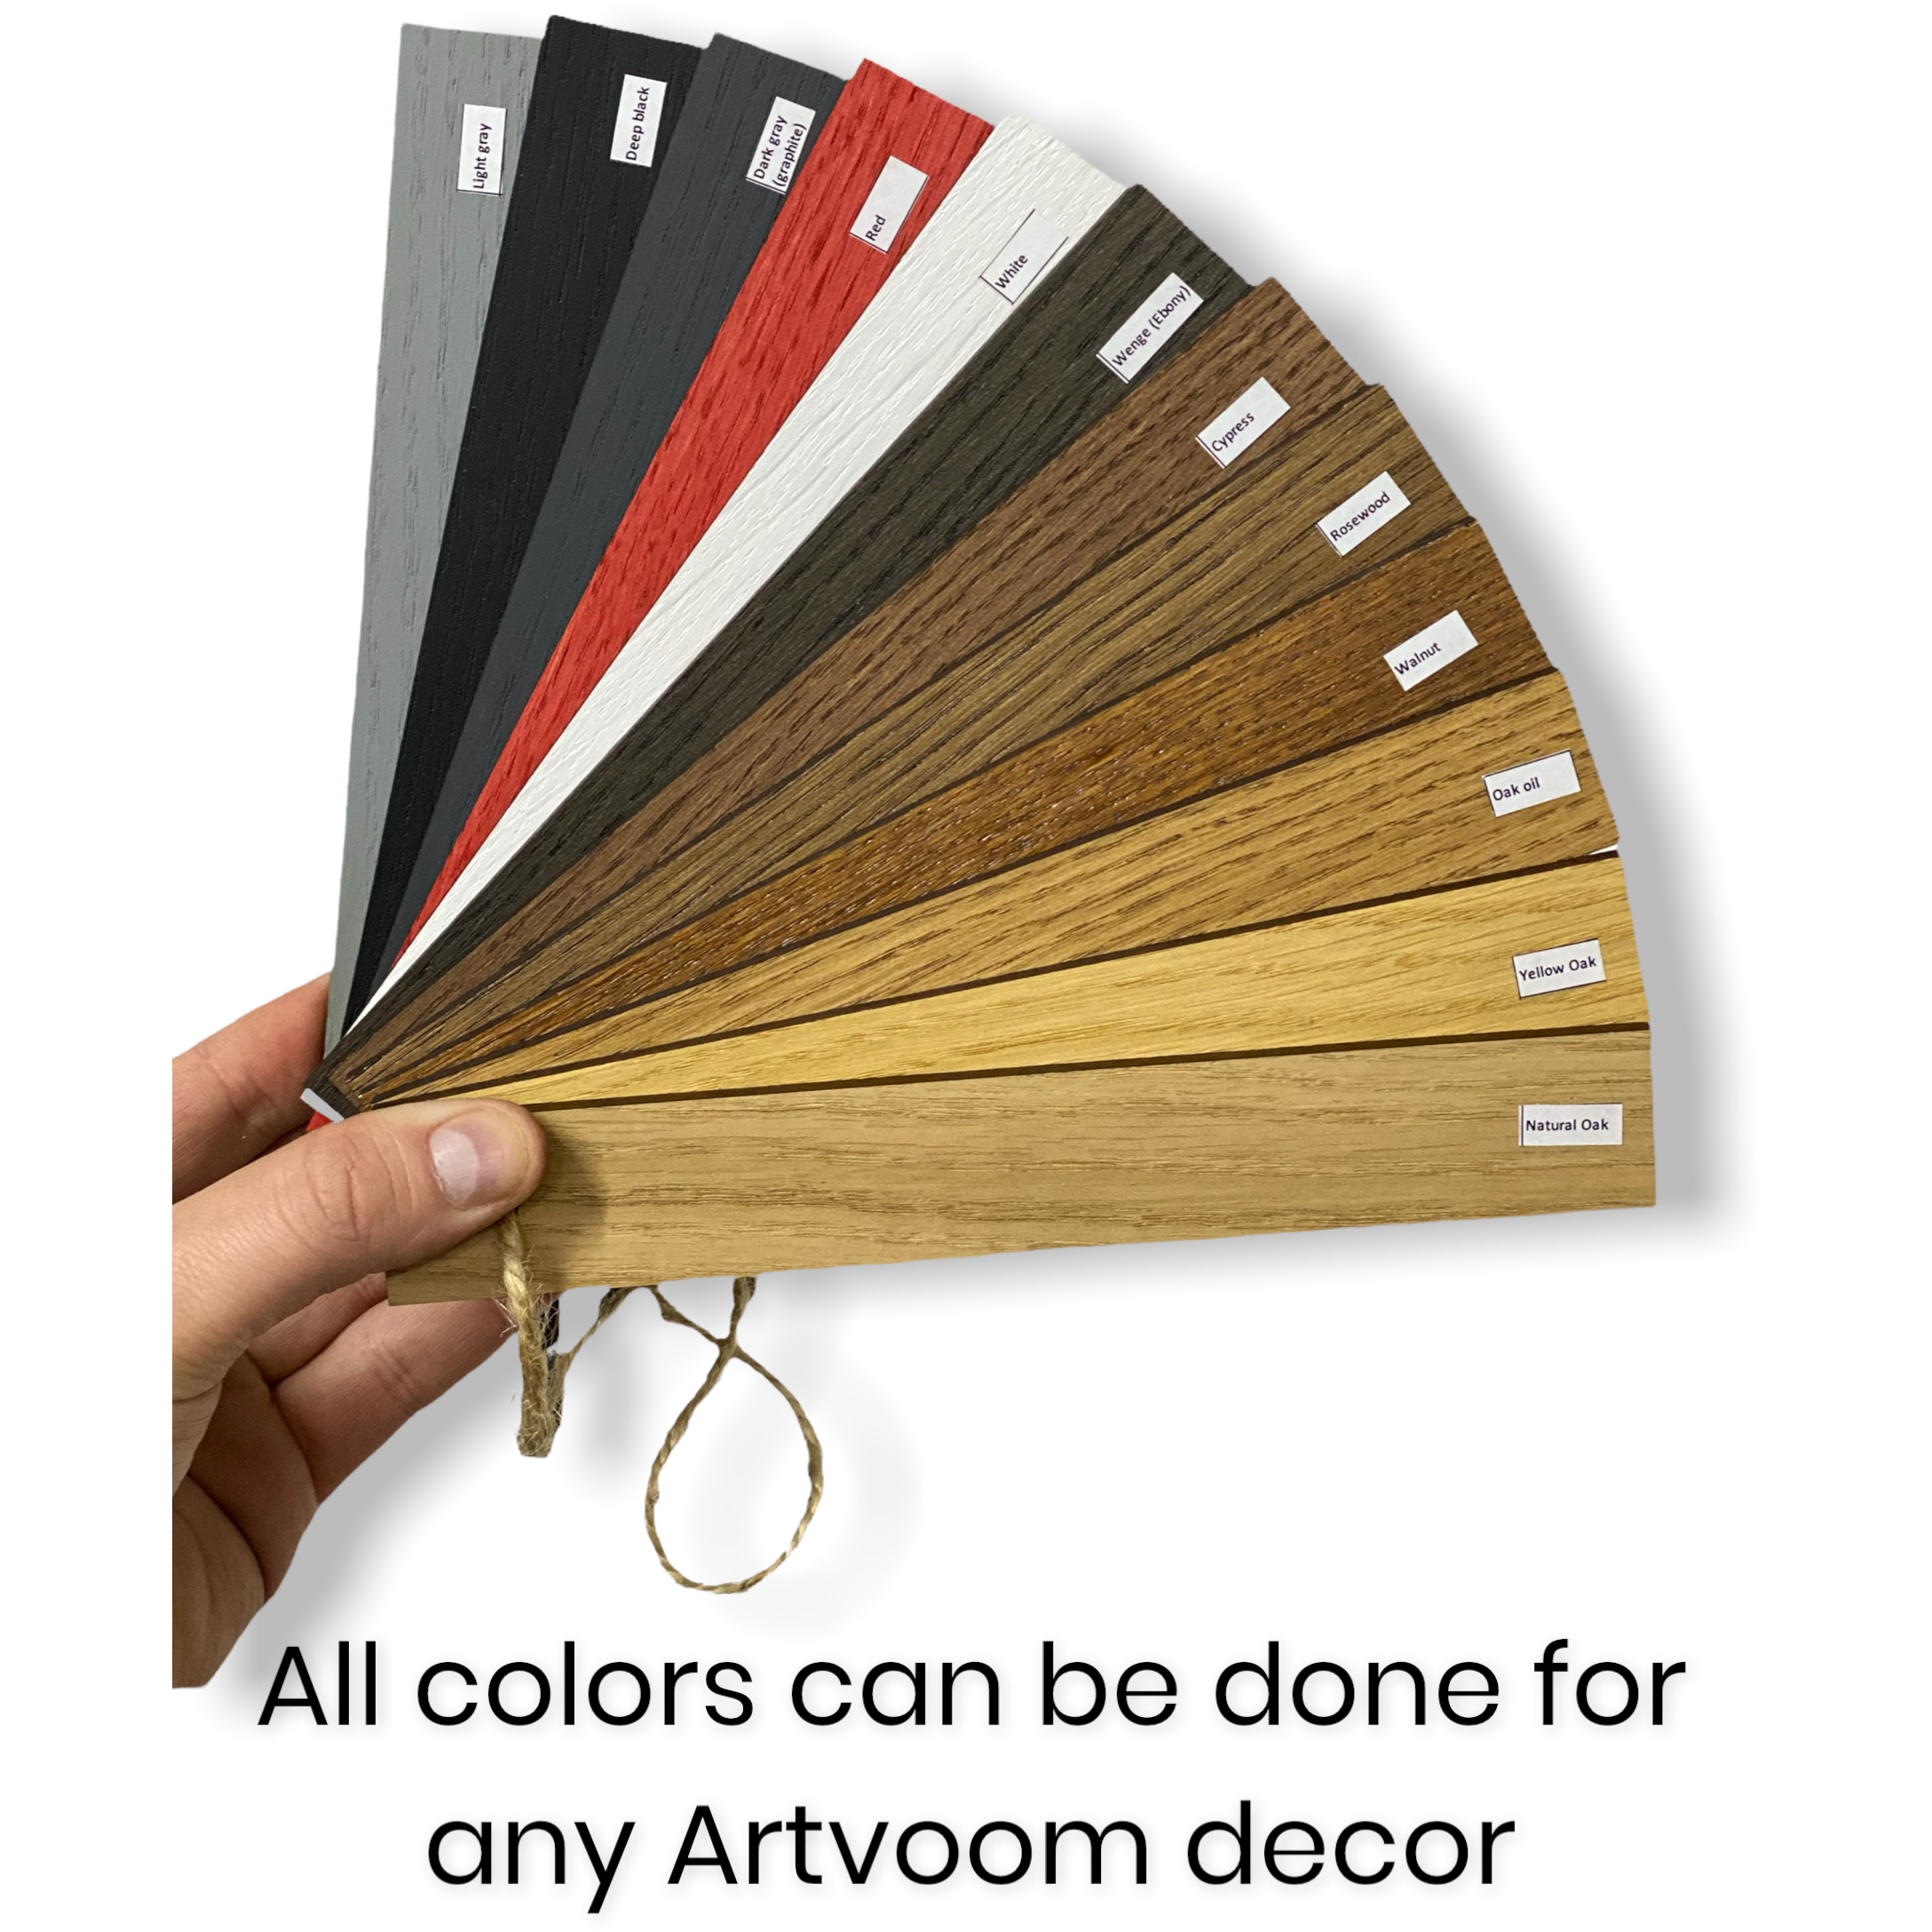 Wooden White Chevrons for Wall Panels, 38 pcs in box. Artvoom Wall Decor - Artvoom